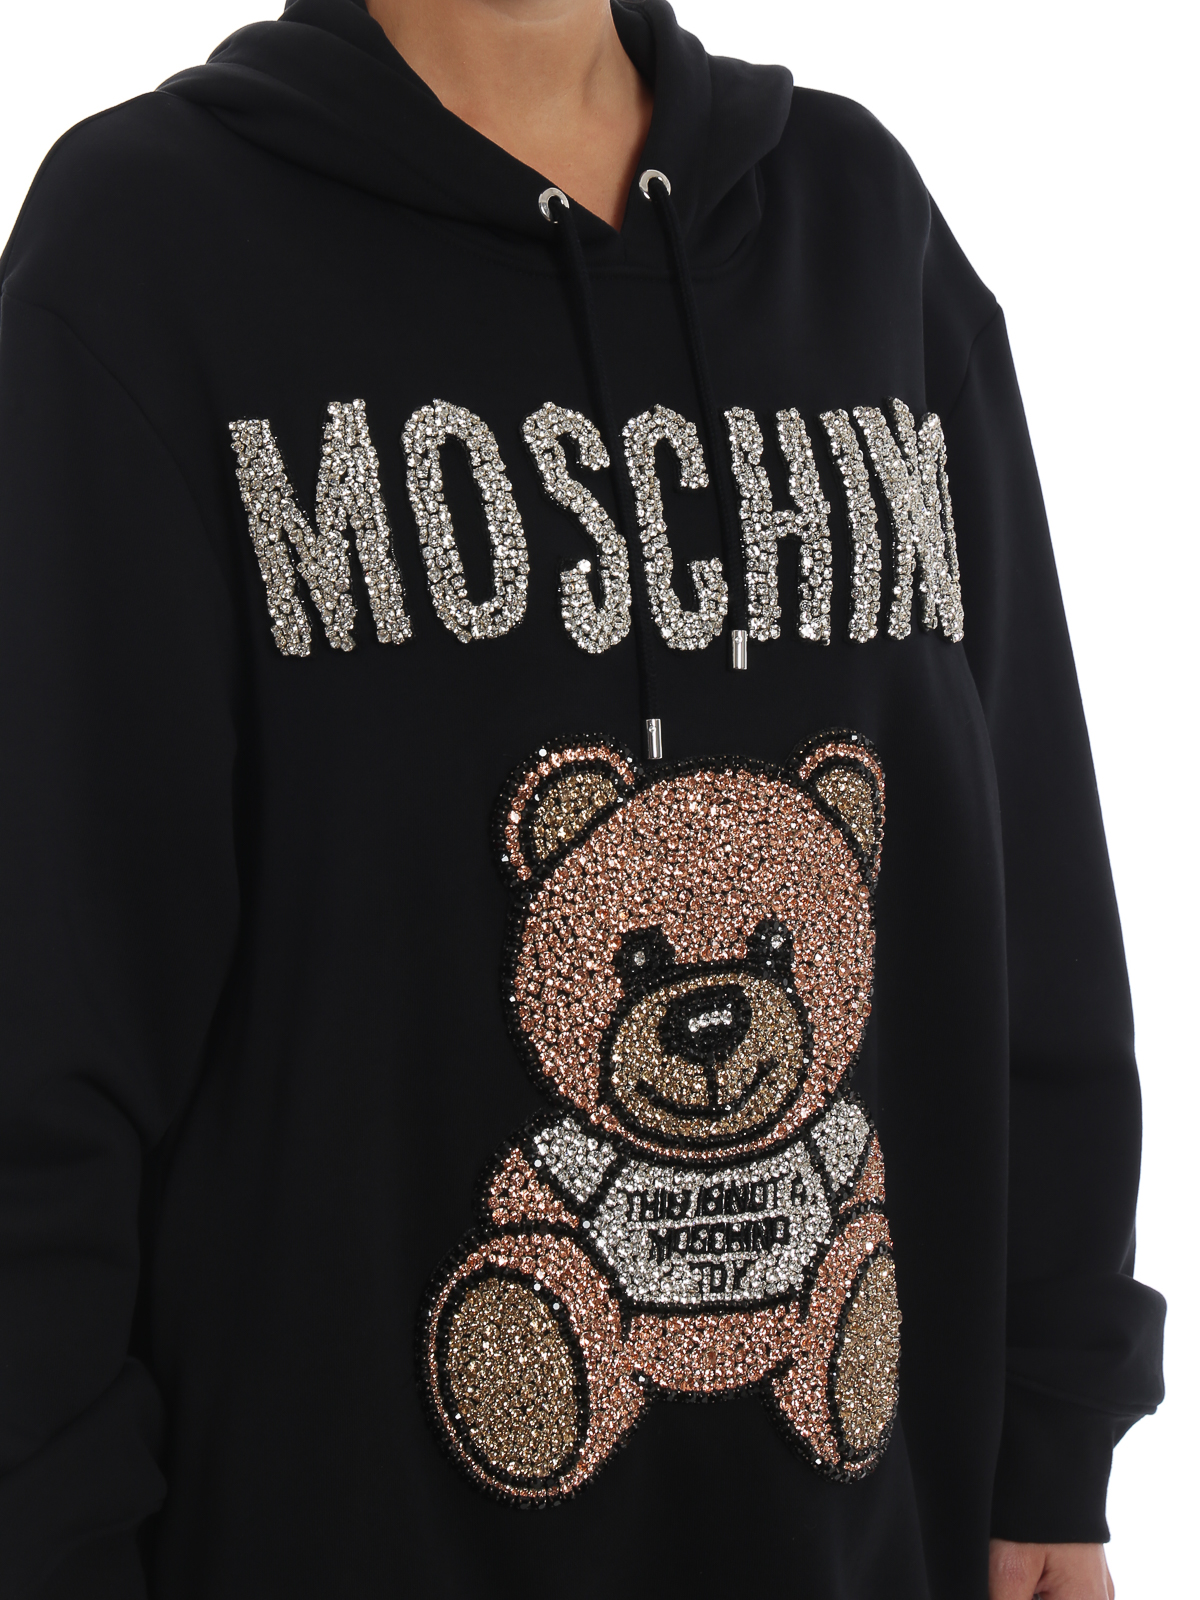 MOSCHINO TEDDY BEAR CROPPED HOODIE 1703 5526/1018